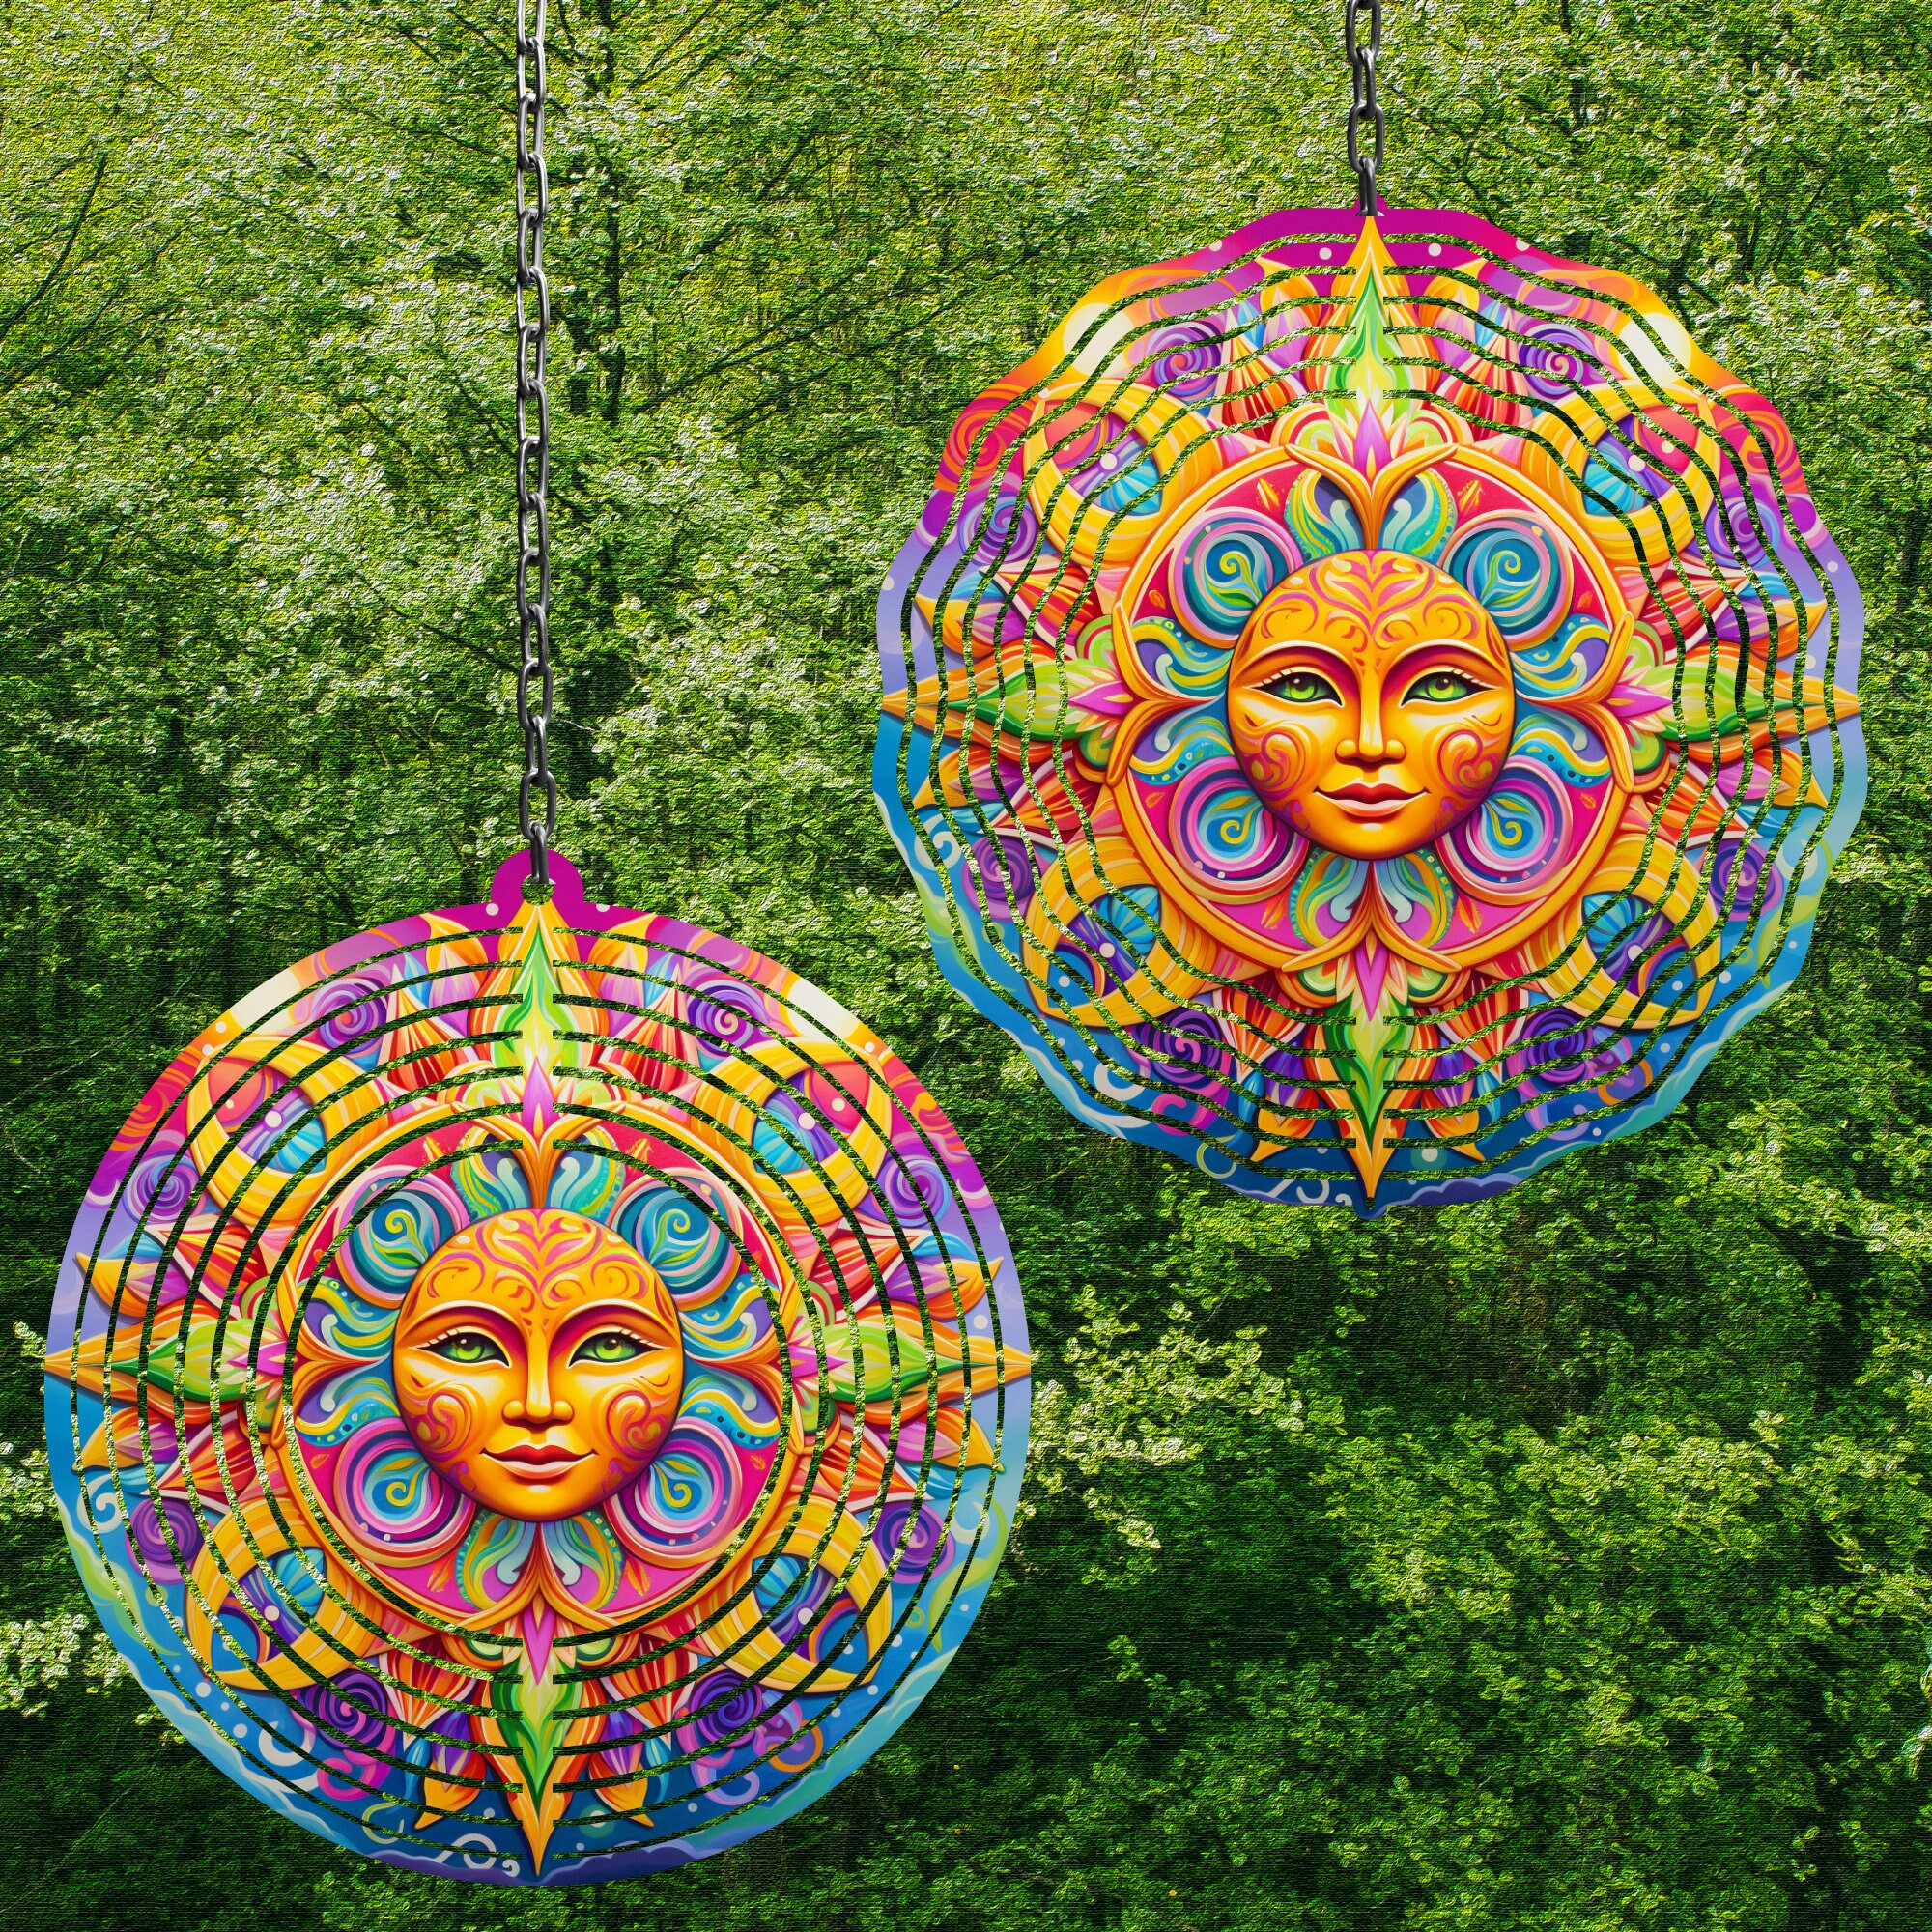 Rainbow Sun Wind Spinner For Yard And Garden, Outdoor Garden Yard Decoration, Garden Decor, Chime Art Gift